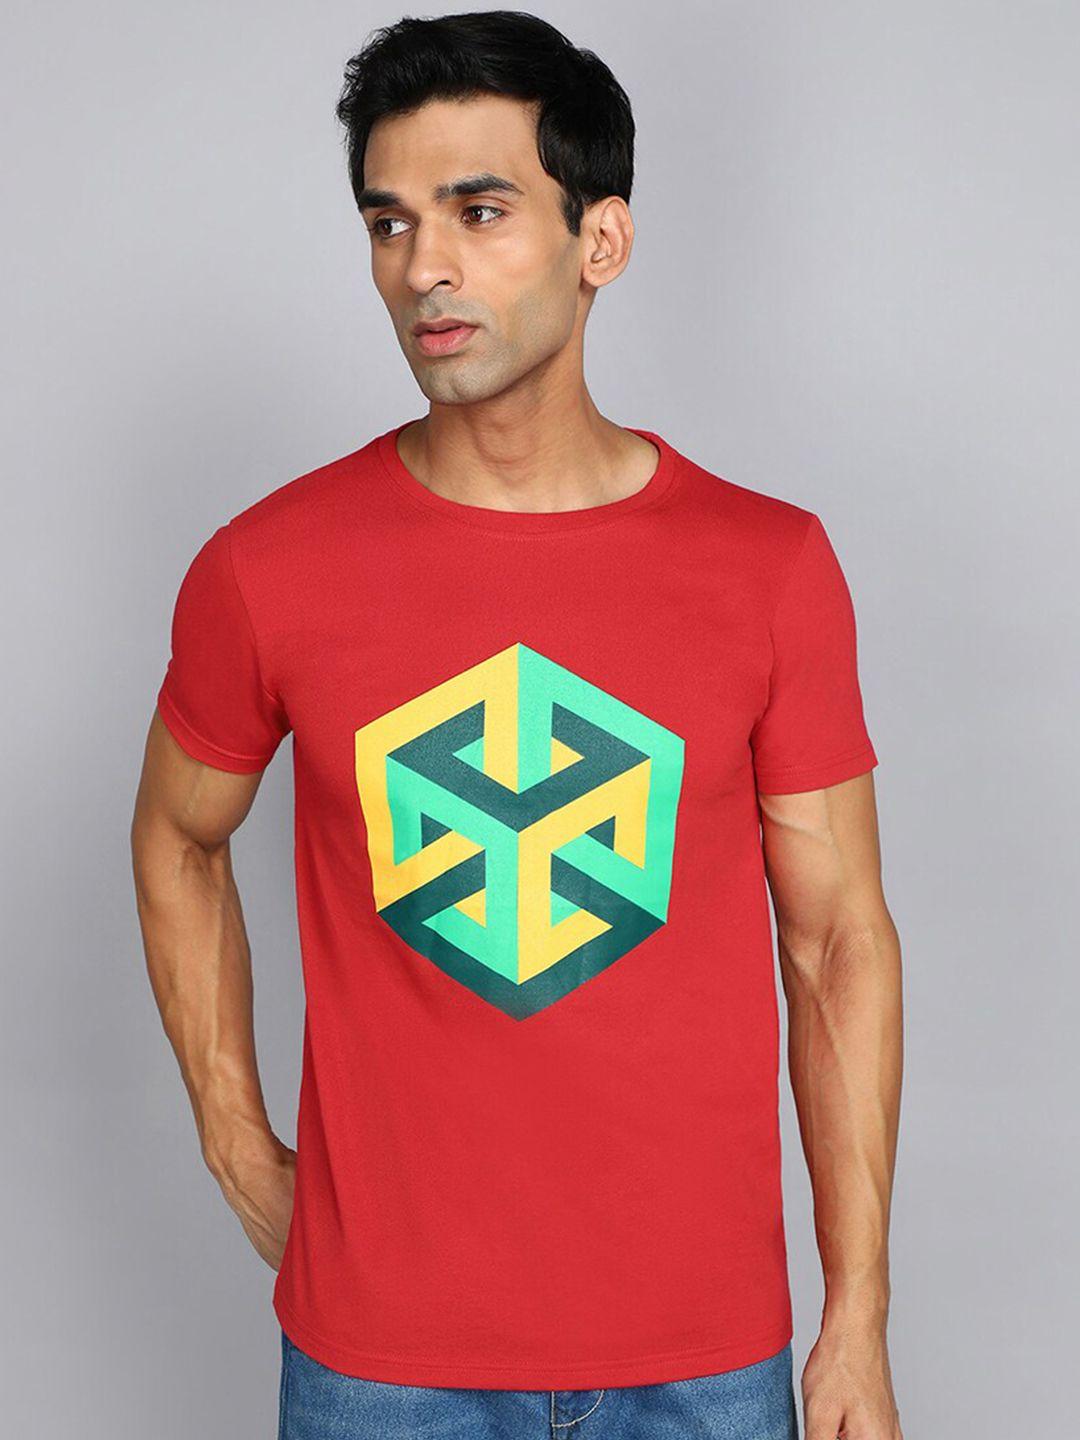 luke-&-lilly-graphic-printed-round-neck-cotton-regular-t-shirt